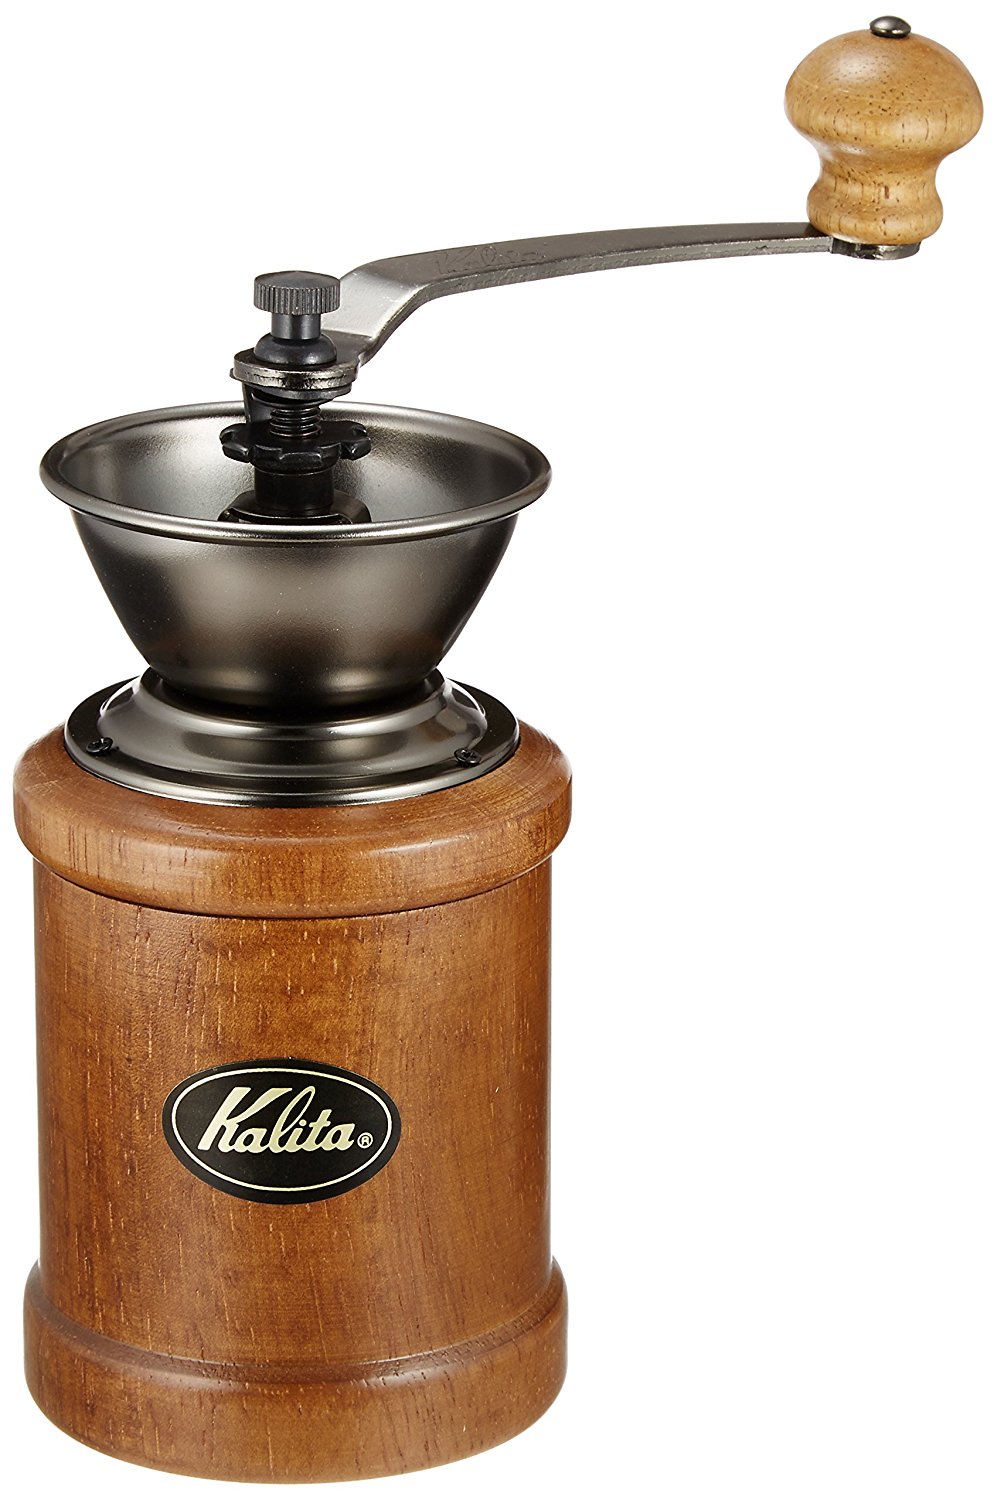 KALITA KH-3 鑄鐵 手搖磨豆器 手搖磨豆機 原木質感 42077 天然木色